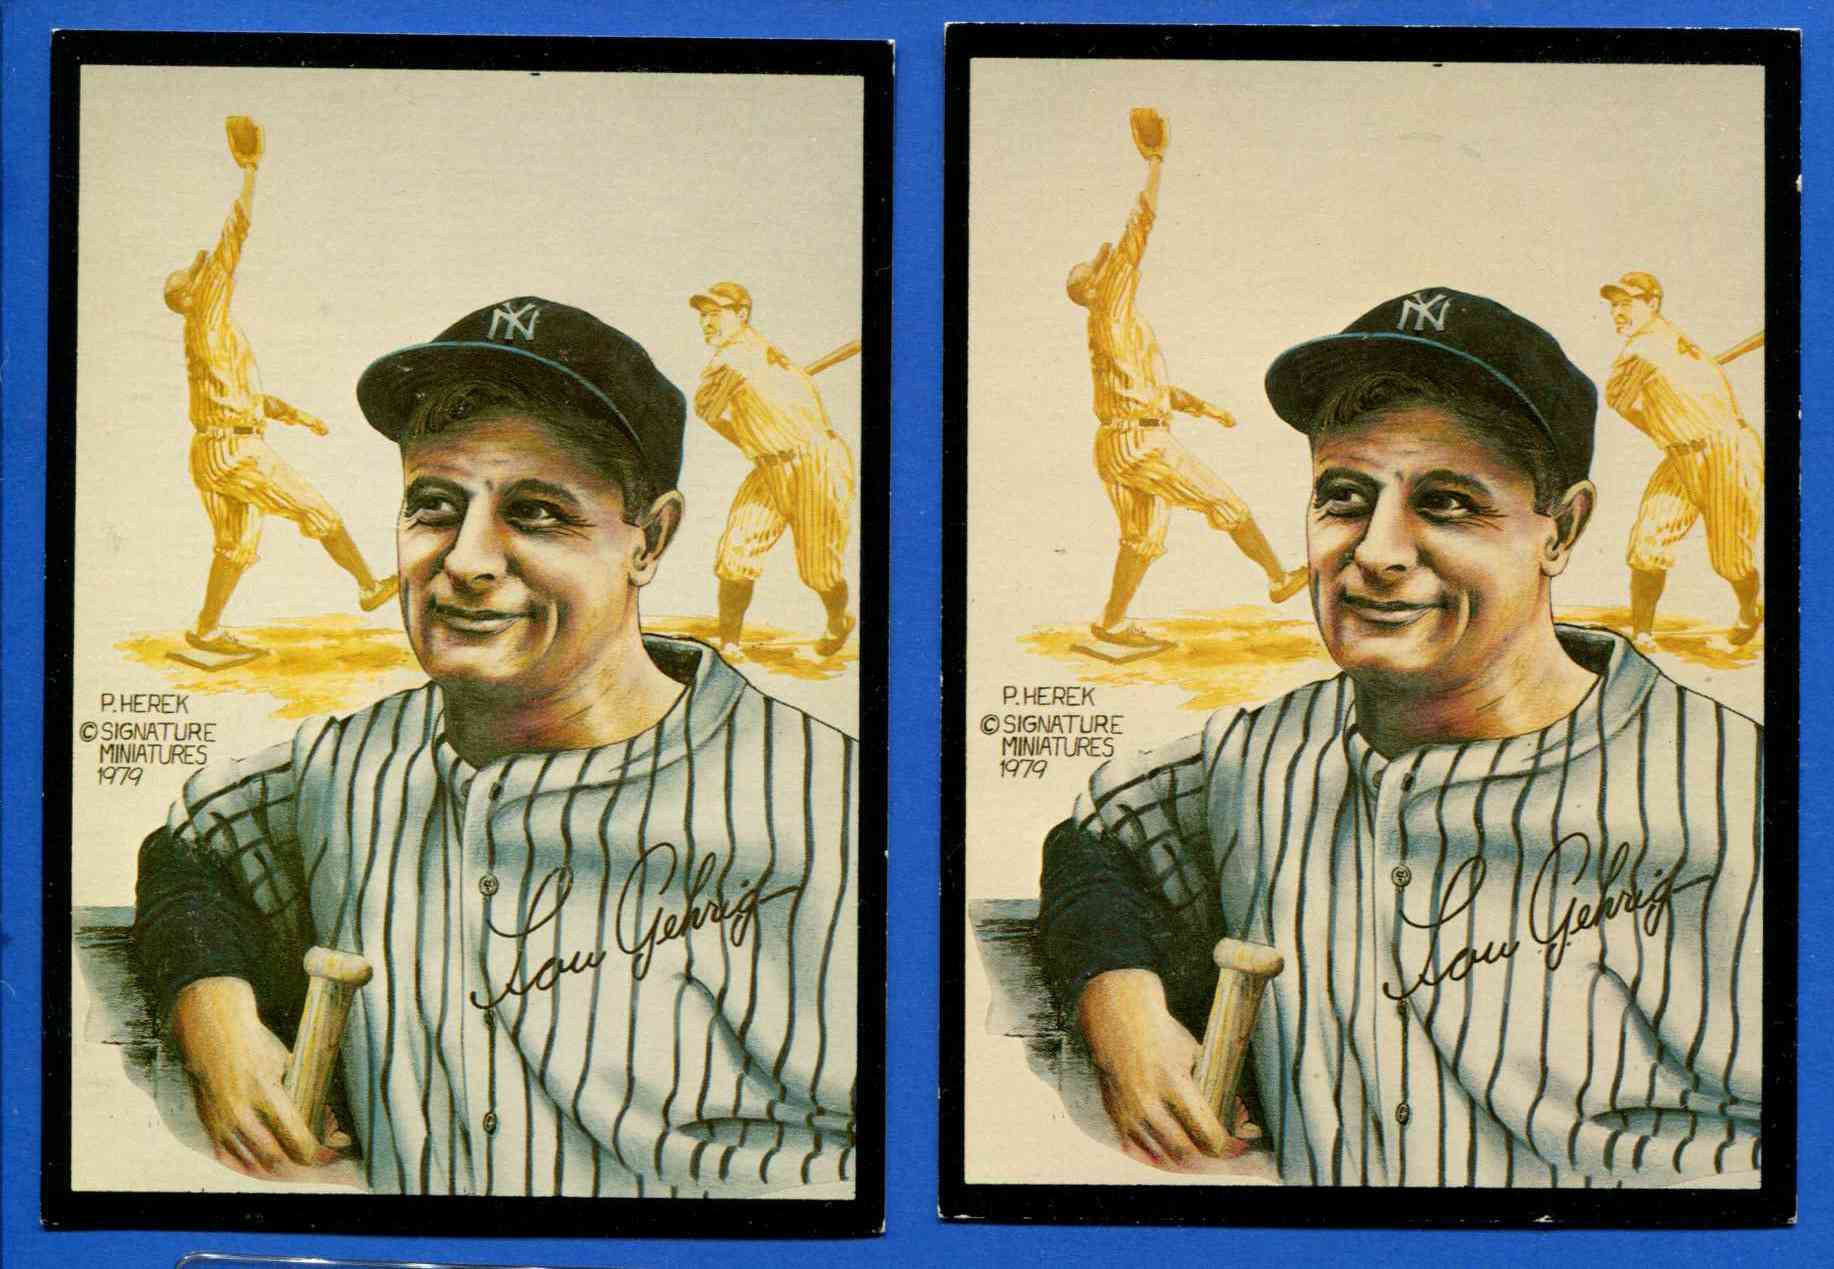 1979 Signature Miniatures ART CARD - LOU GEHRIG [#b] (Yankees) Baseball cards value